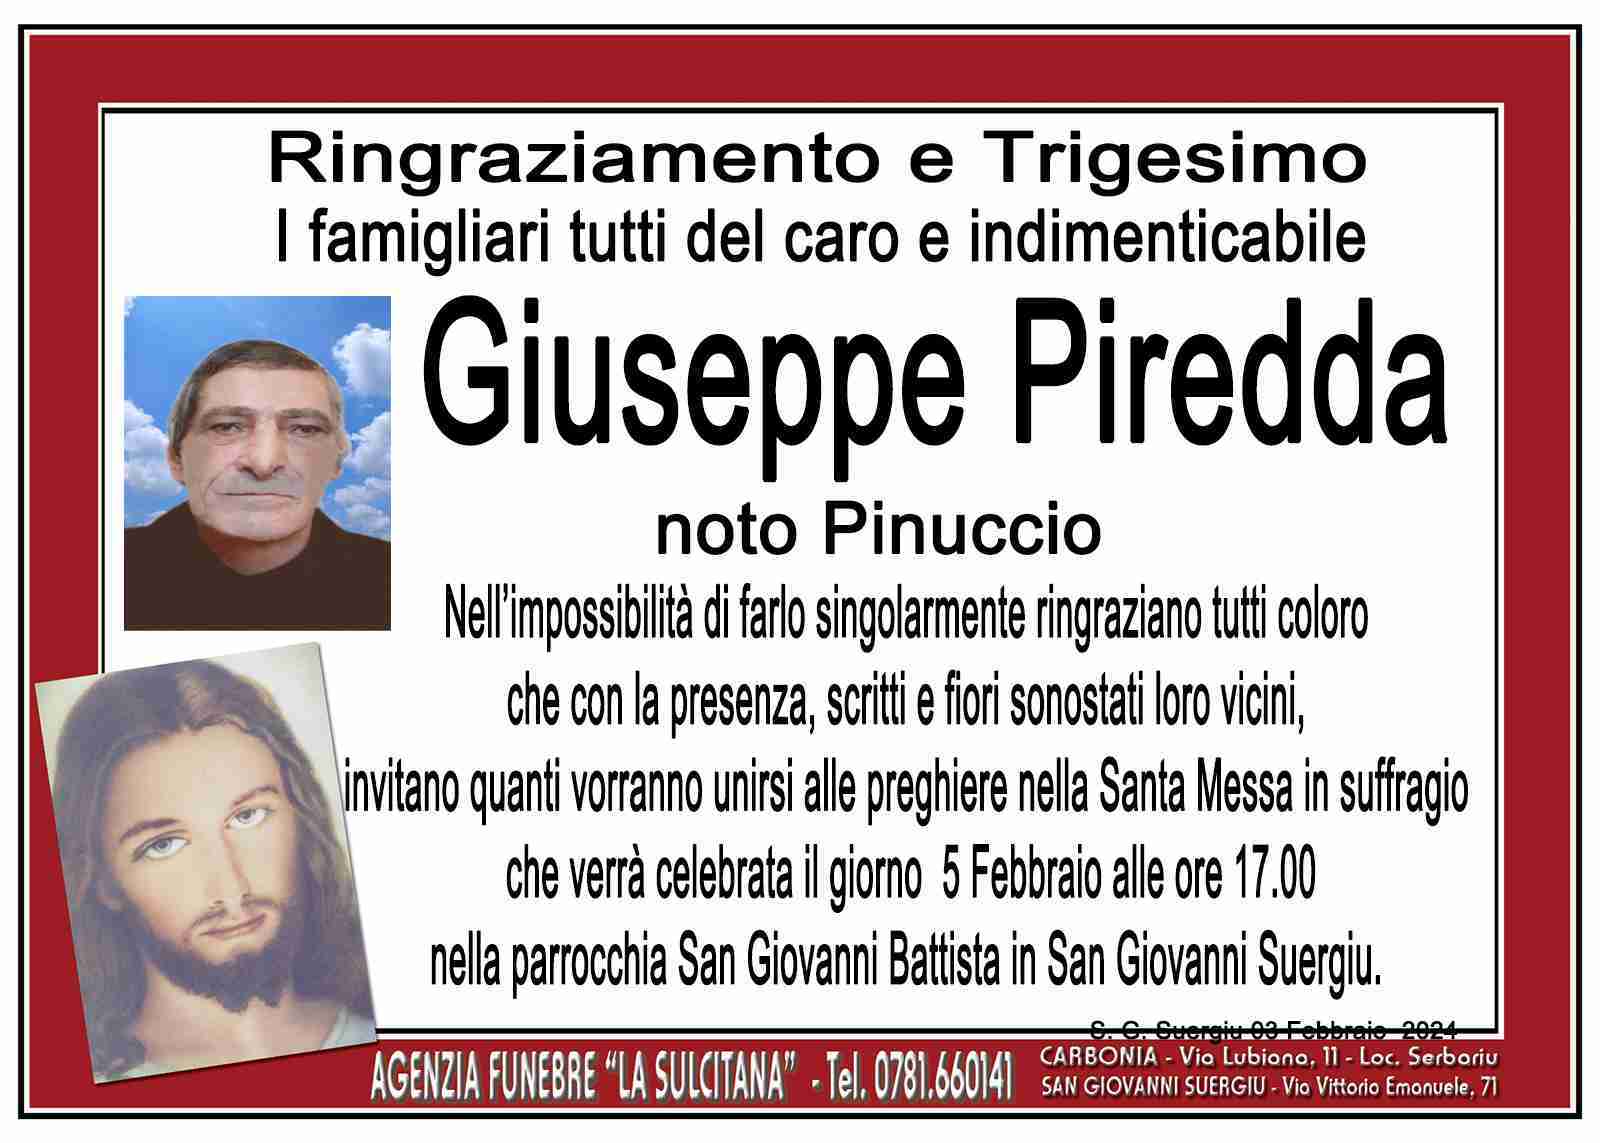 Giuseppe Piredda